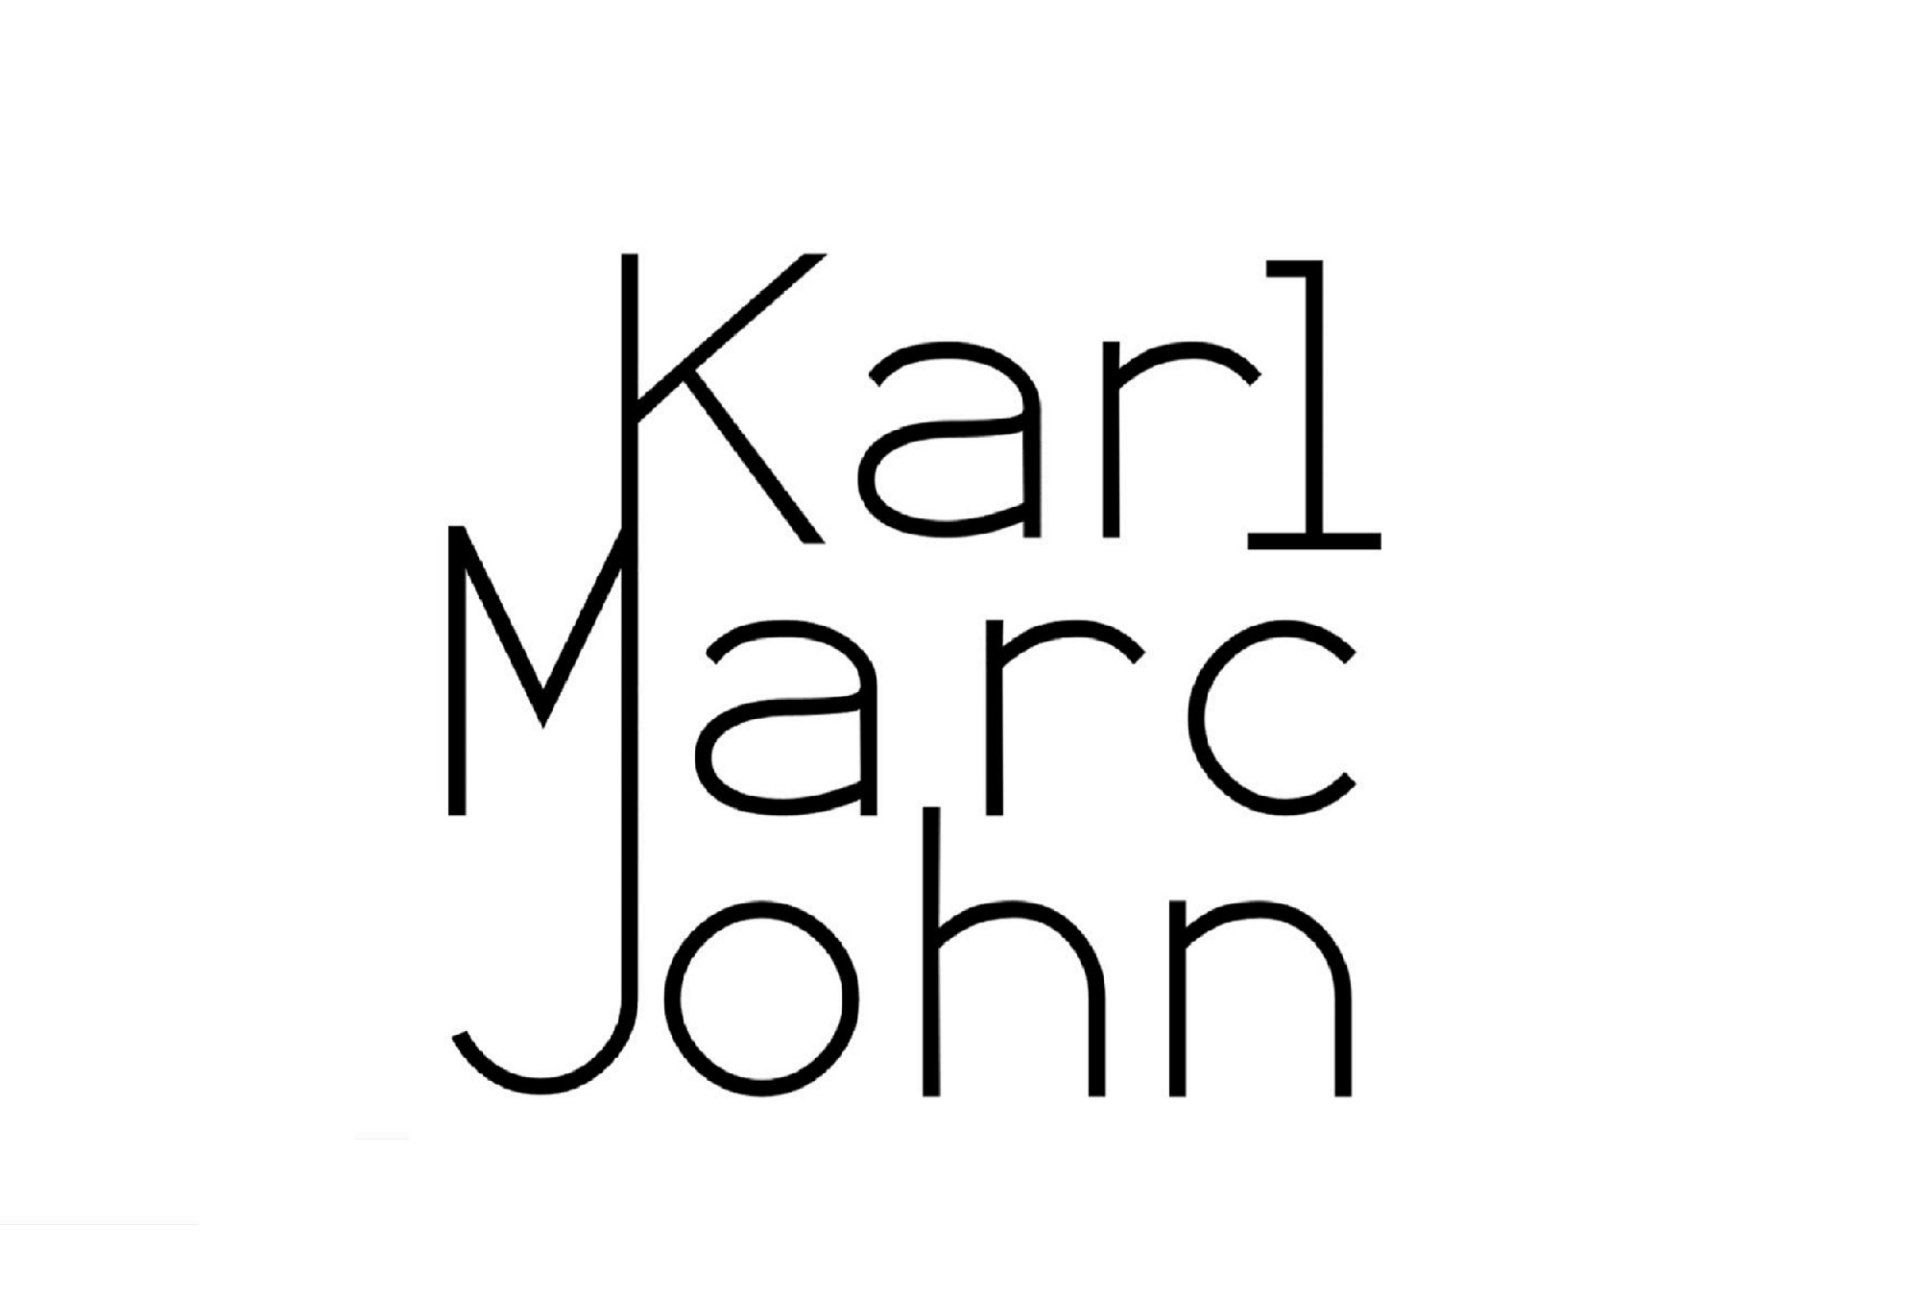 logo karl mark john